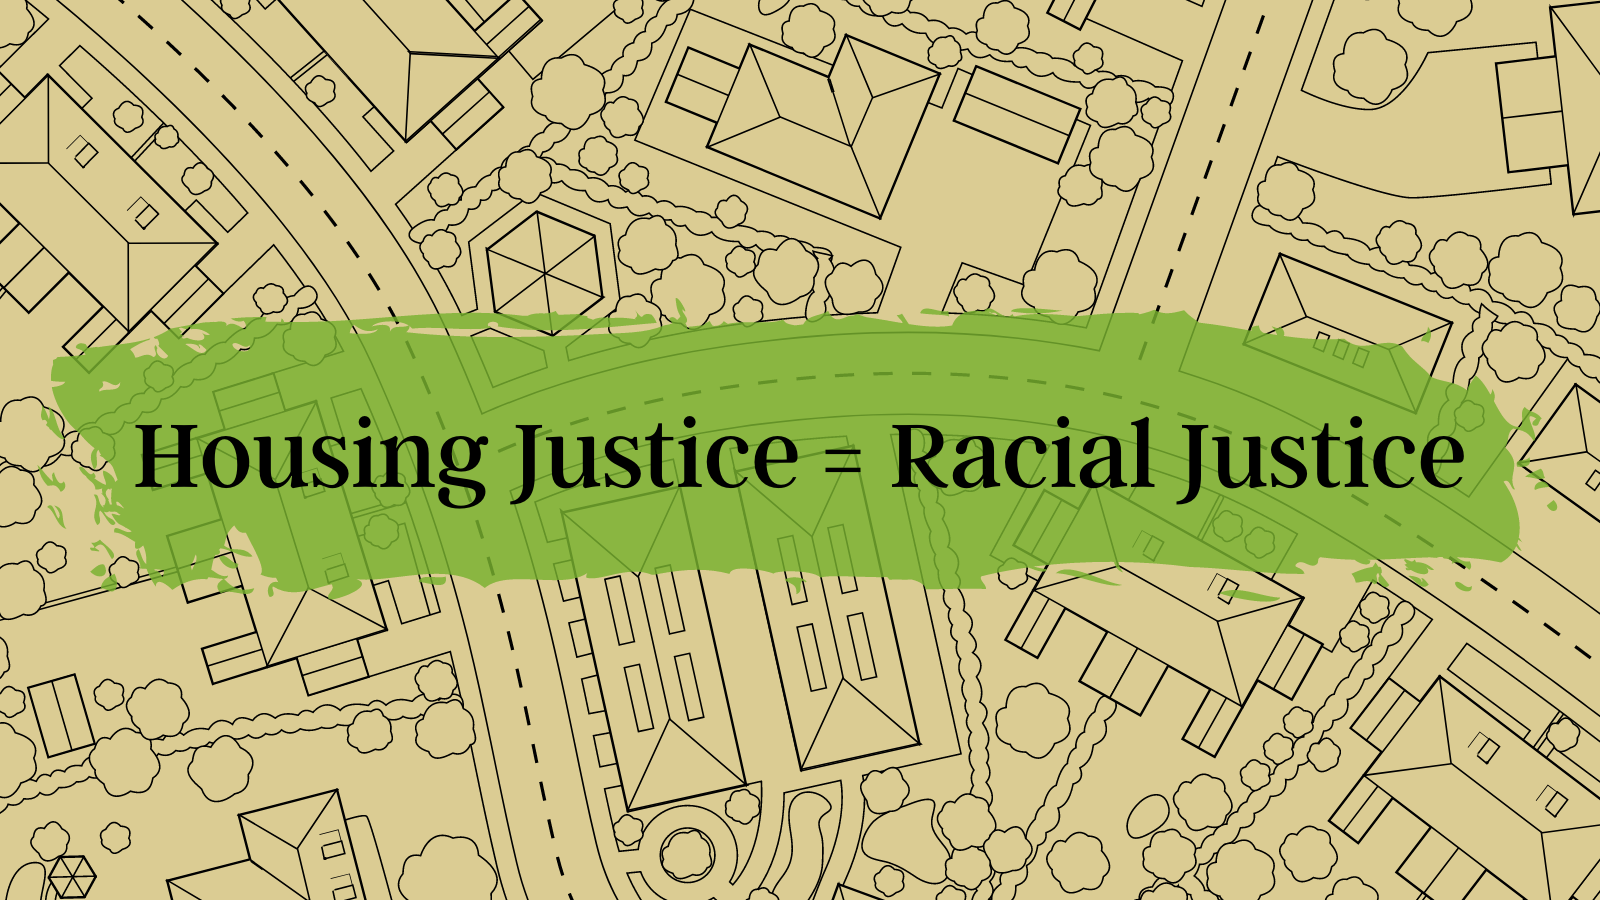 Housing Justice = Racial Justice